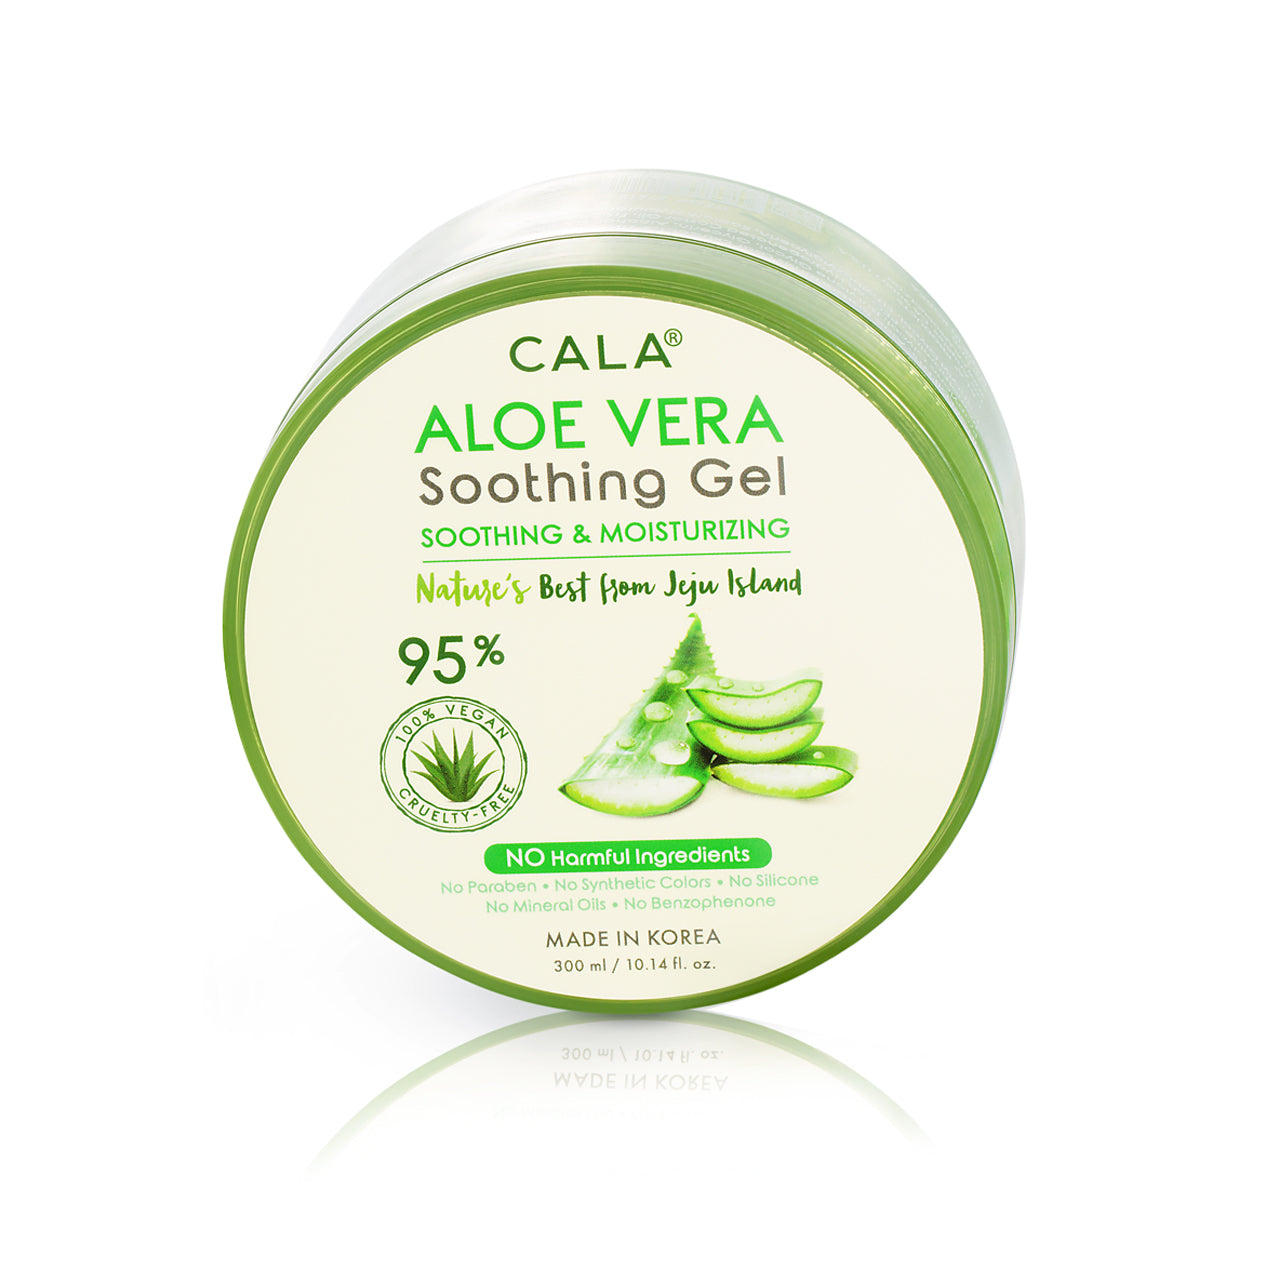 Cala Pro Aloe Vera Moisturizing & Soothing Gel